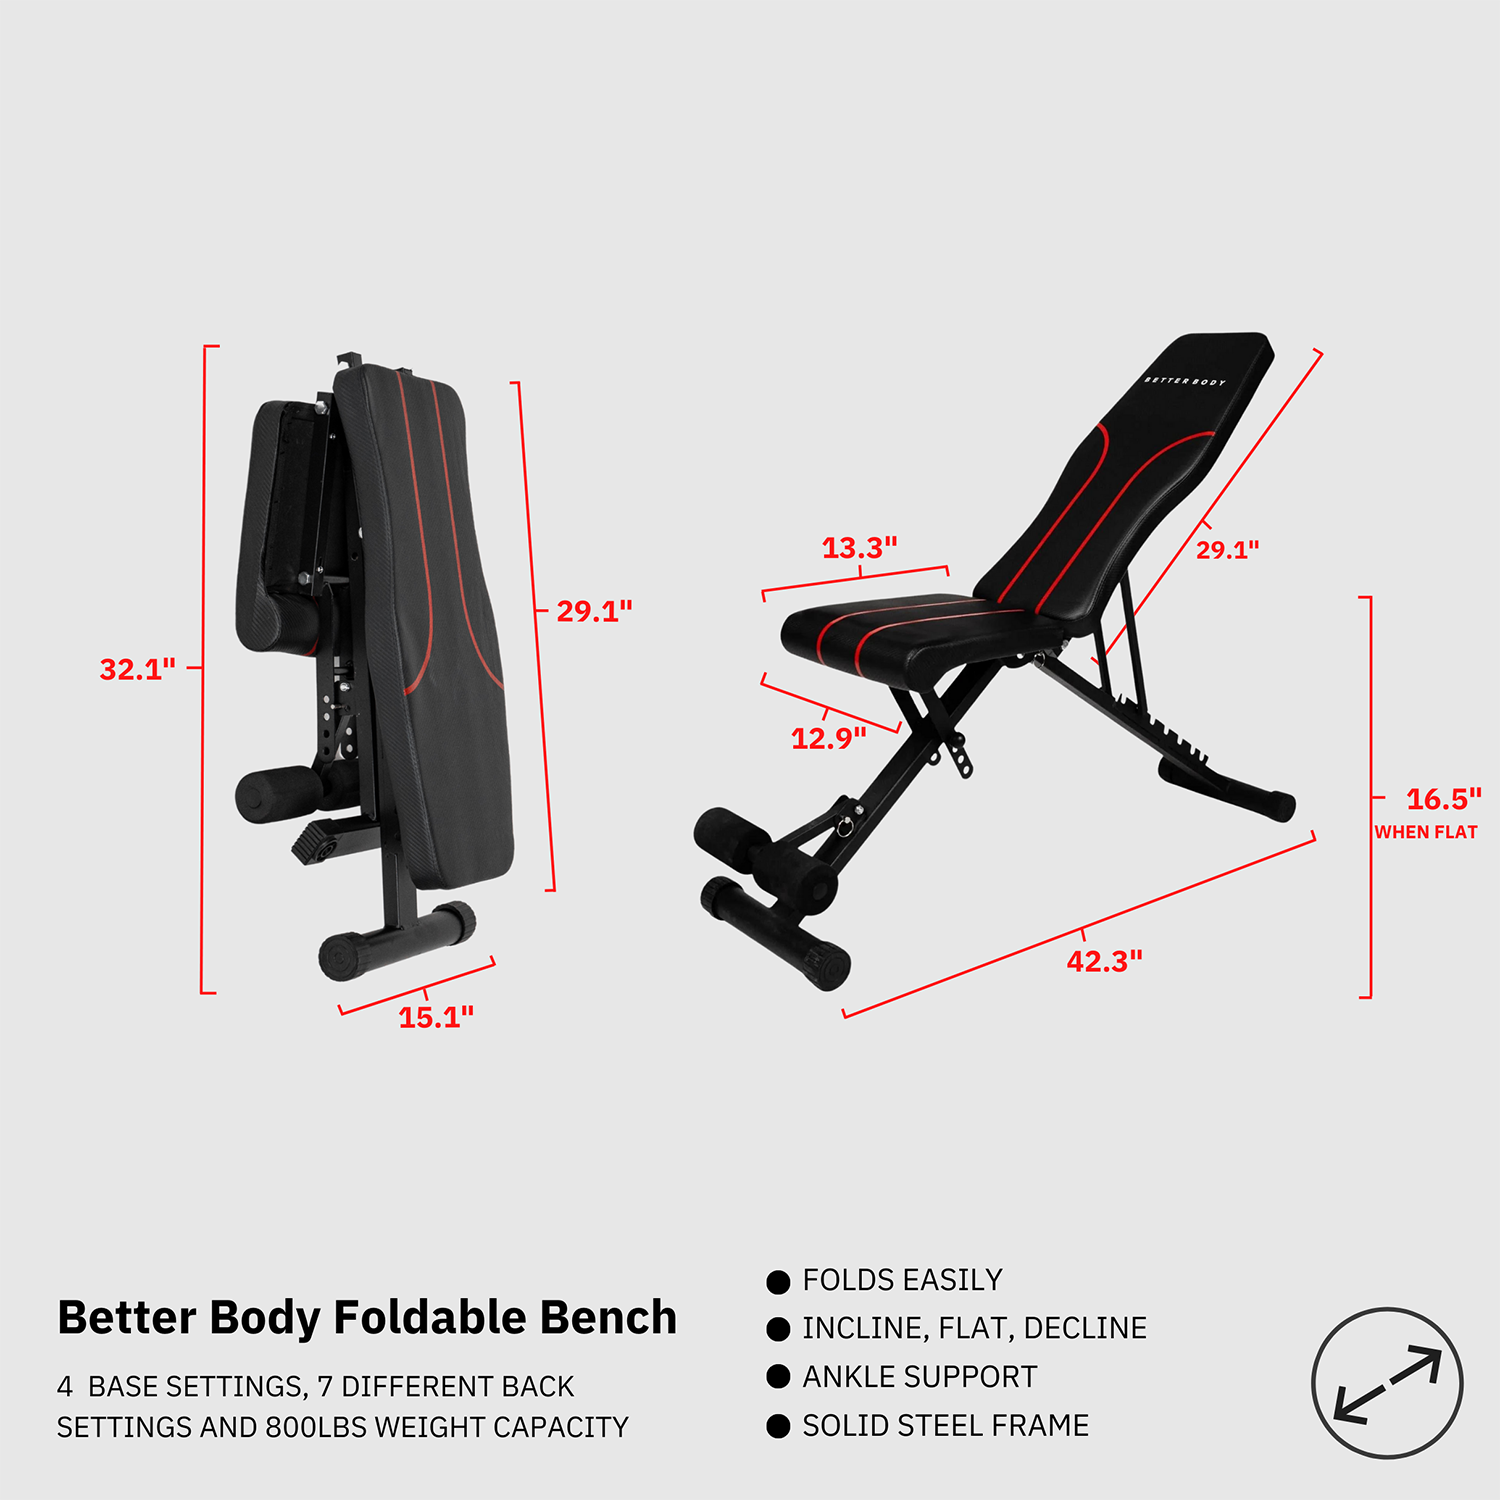 Better Body Foldable Bench